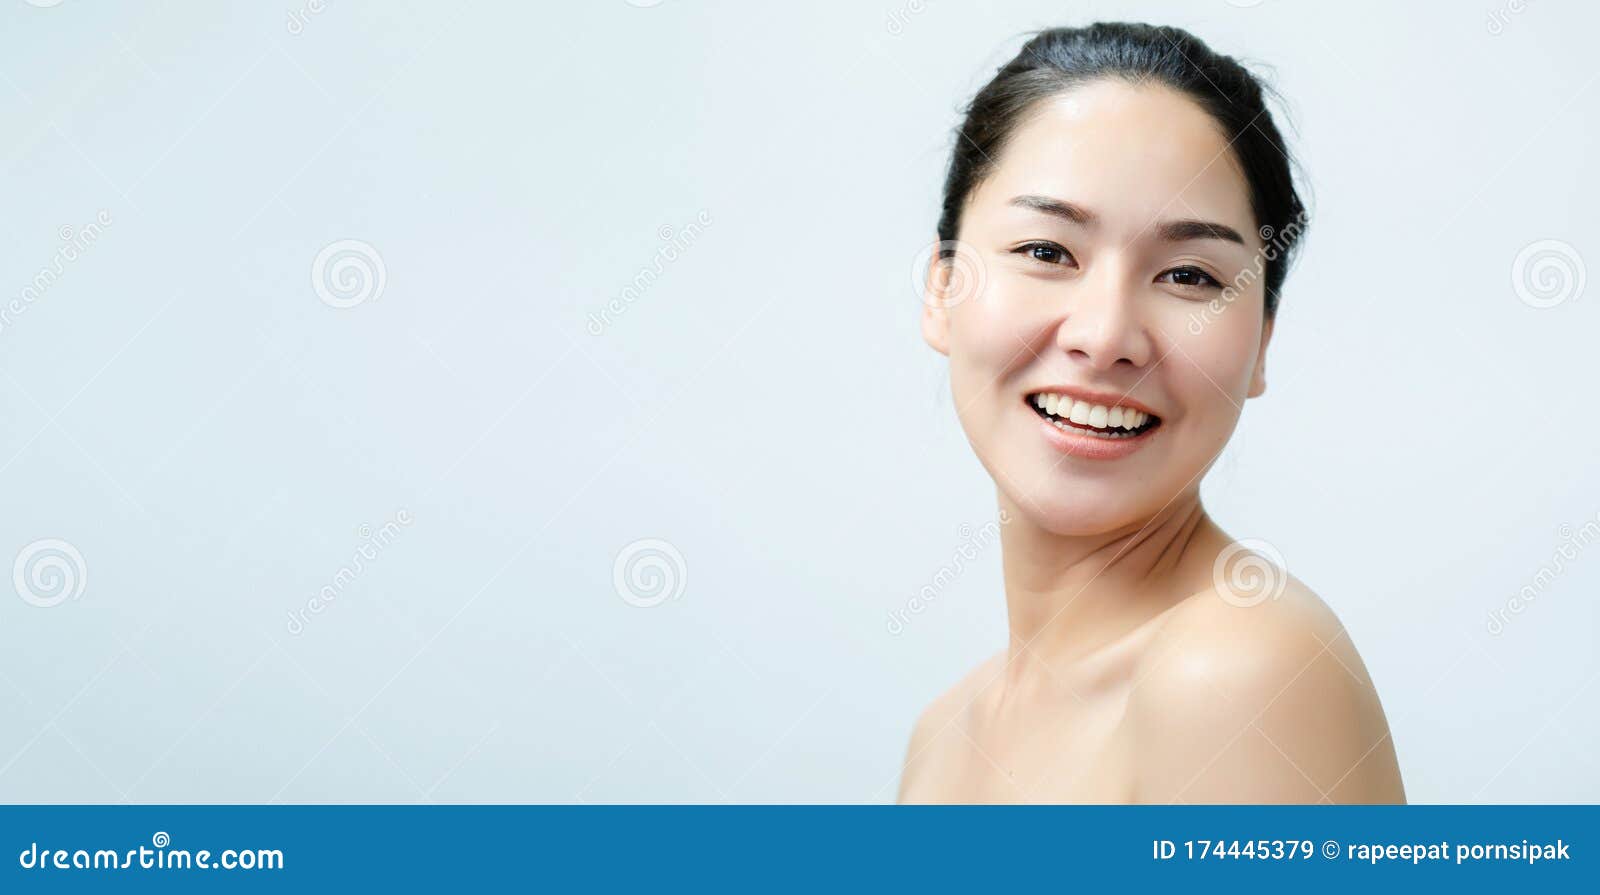 asian free Nude women